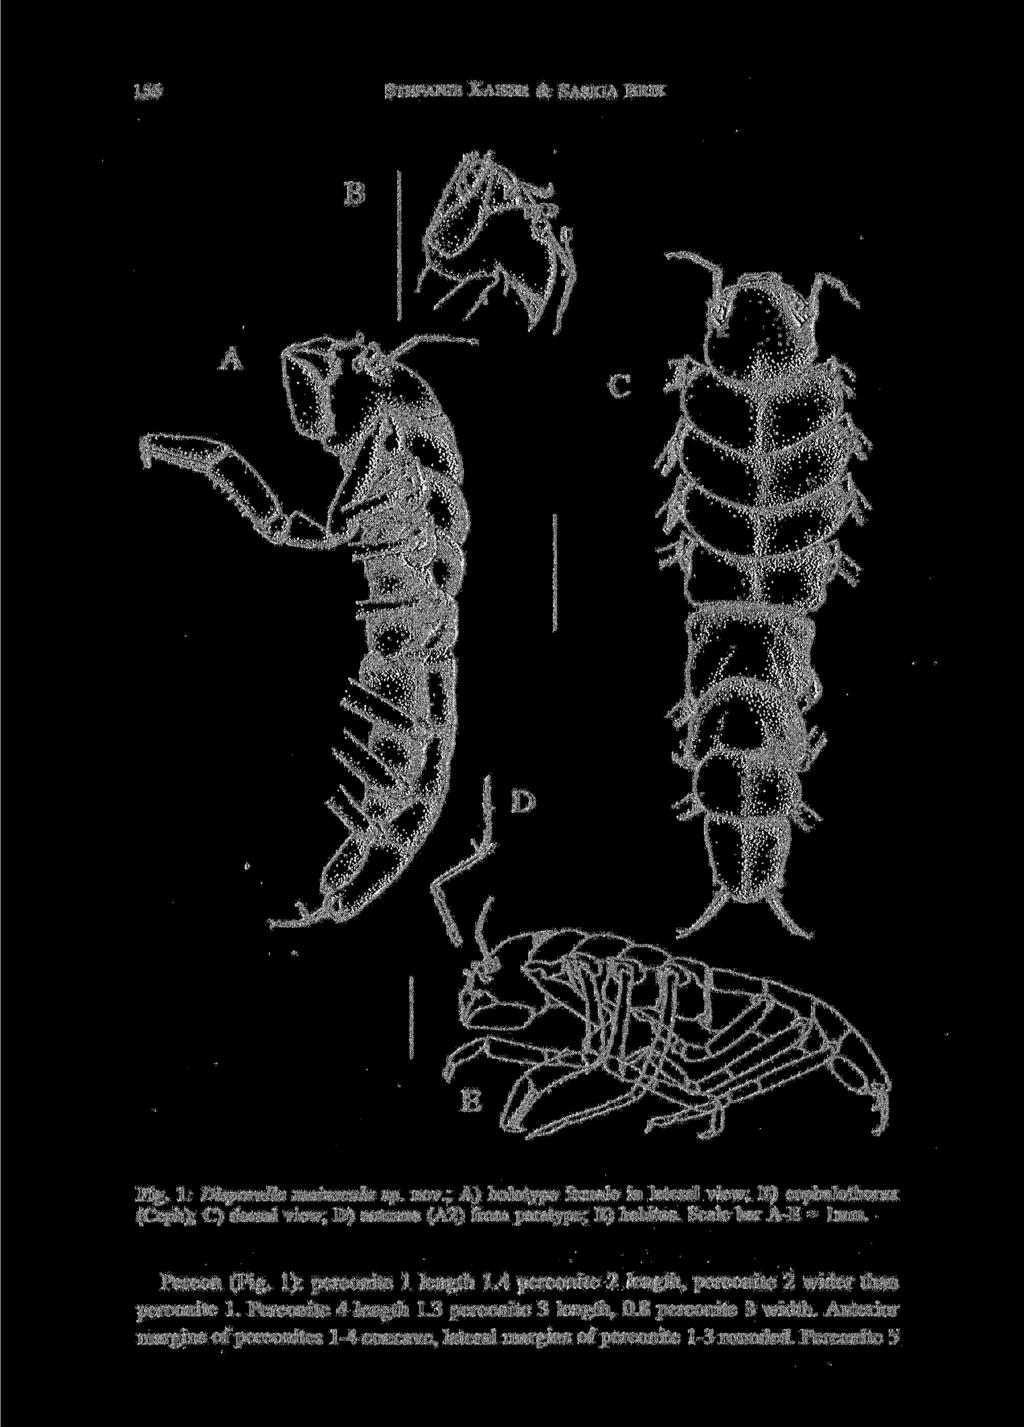 156 STEFANIE KAISER & SASKIA BRIX Fig. 1: Disparella maiuscula sp. nov.; A) holotype female in lateral view; B) cephalothorax (Ceph); C) dorsal view; D) antenna (A2) from paratype; E) habitus.